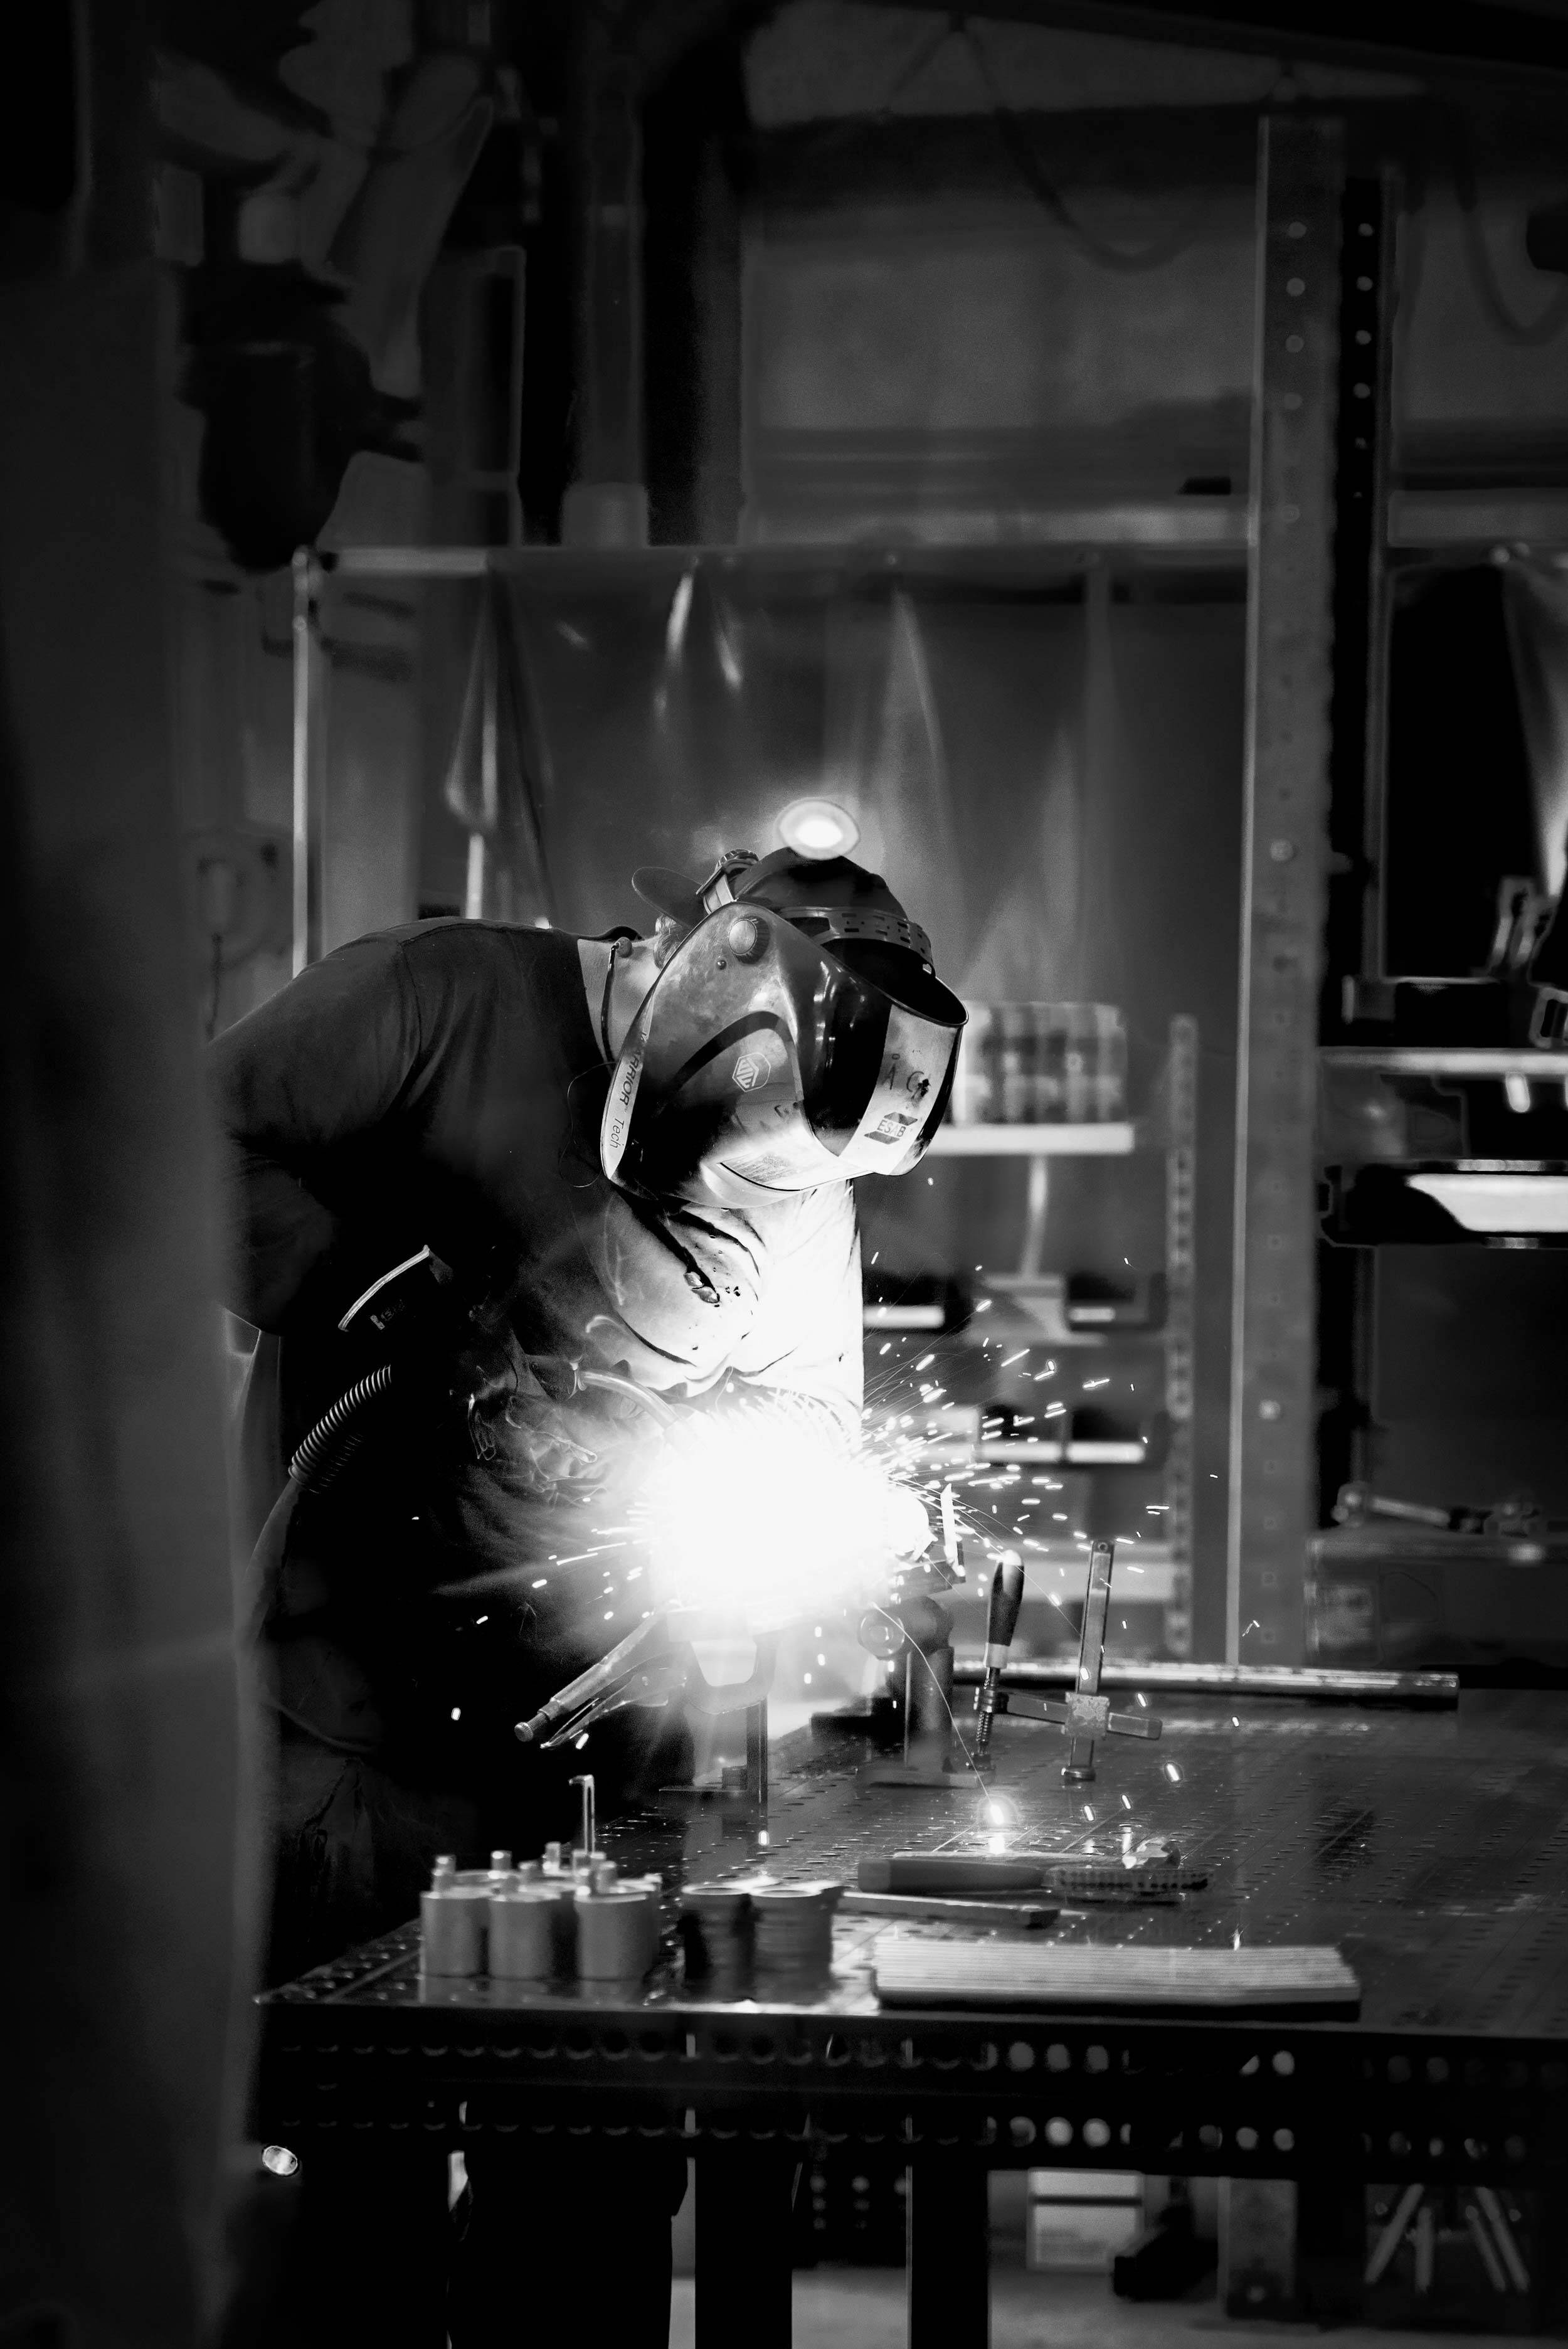 stringo-production-welding